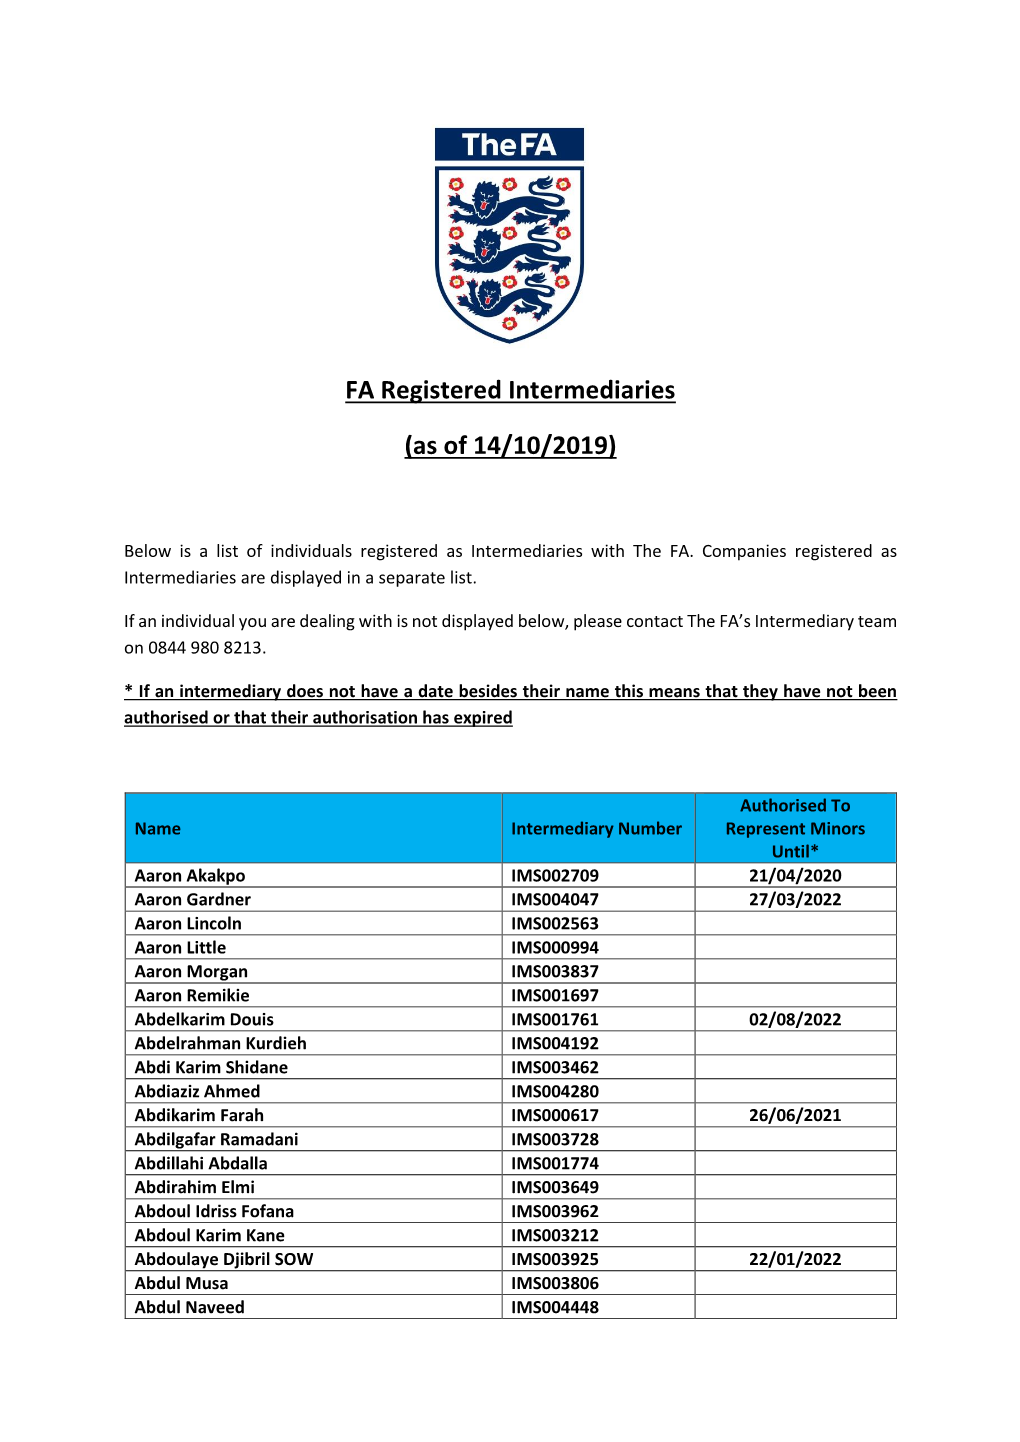 FA Registered Intermediaries (As of 14/10/2019)